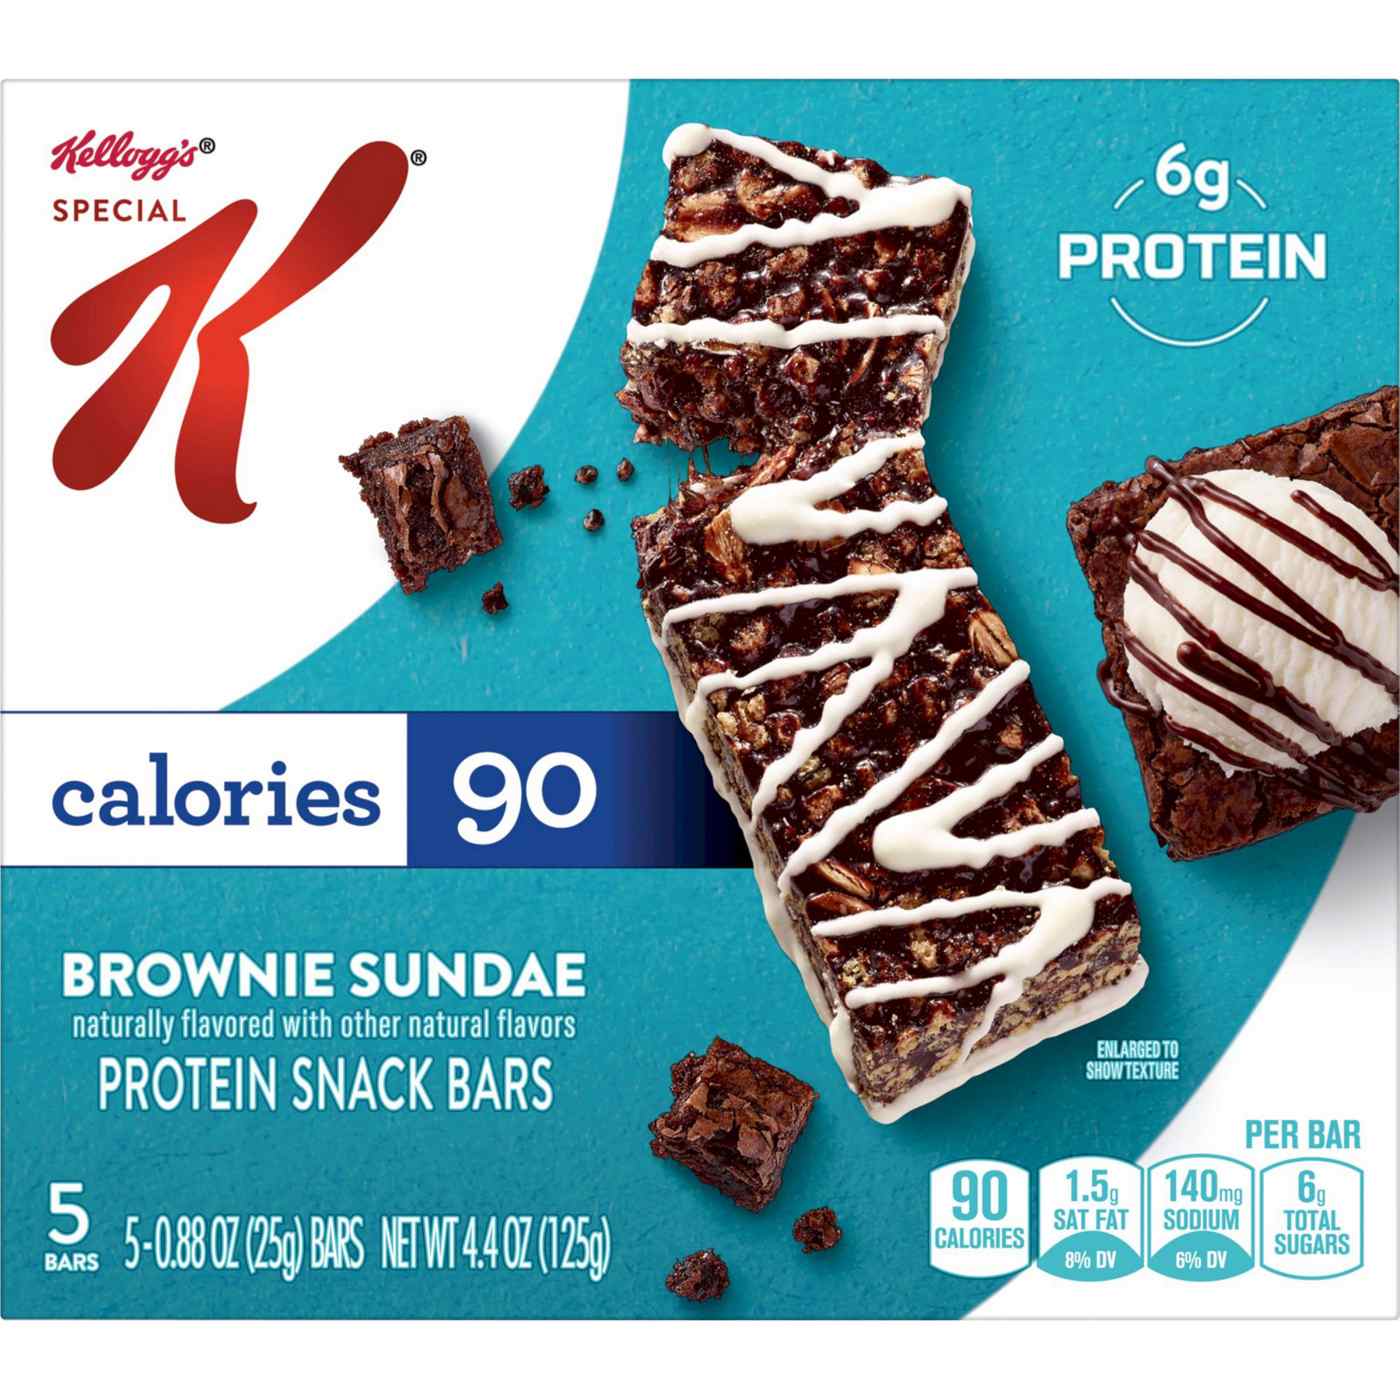 Kellogg's Special K Brownie Sundae Protein Snack Bars; image 4 of 5